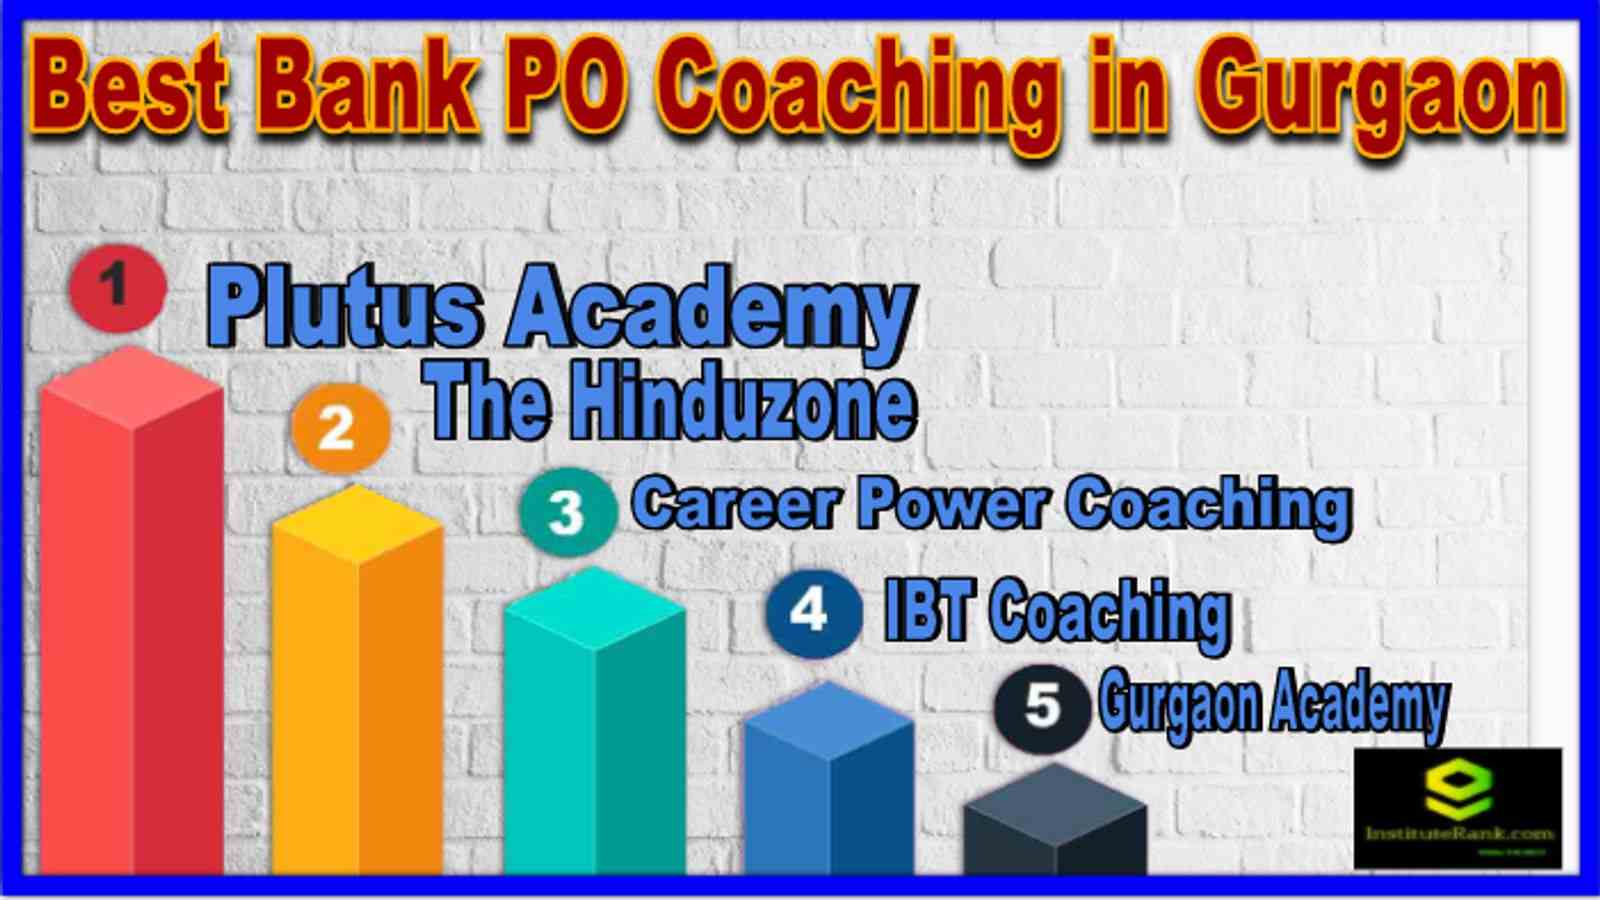 Best bank PO Coaching in Gurgaon